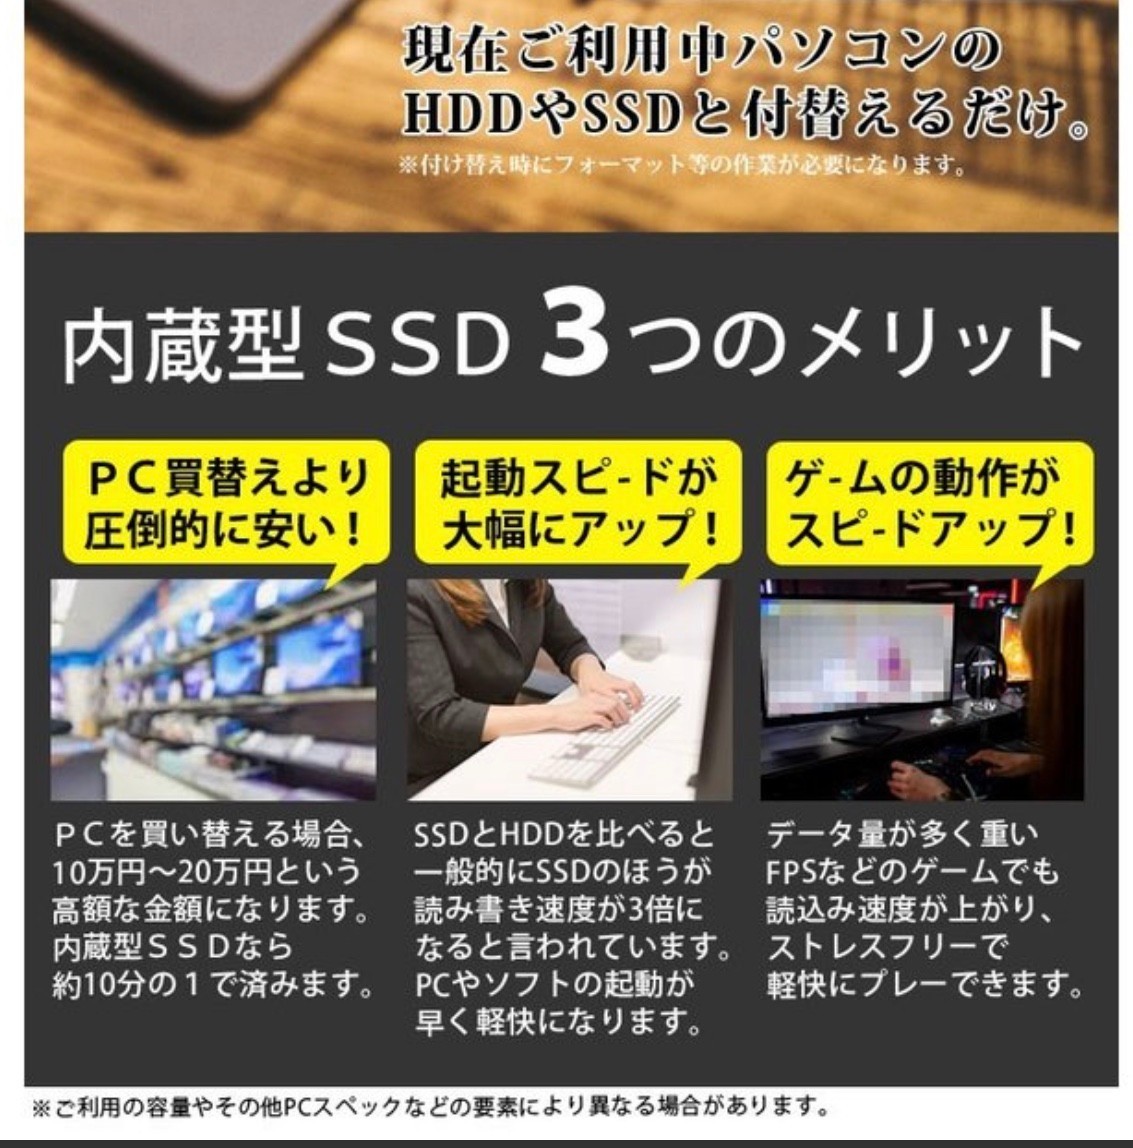 SSD 120GB Vaseky 新品 未開封2.5インチ 　テレワーク推薦品(1000以上プレゼント付き)限定販売、早い者勝ち 